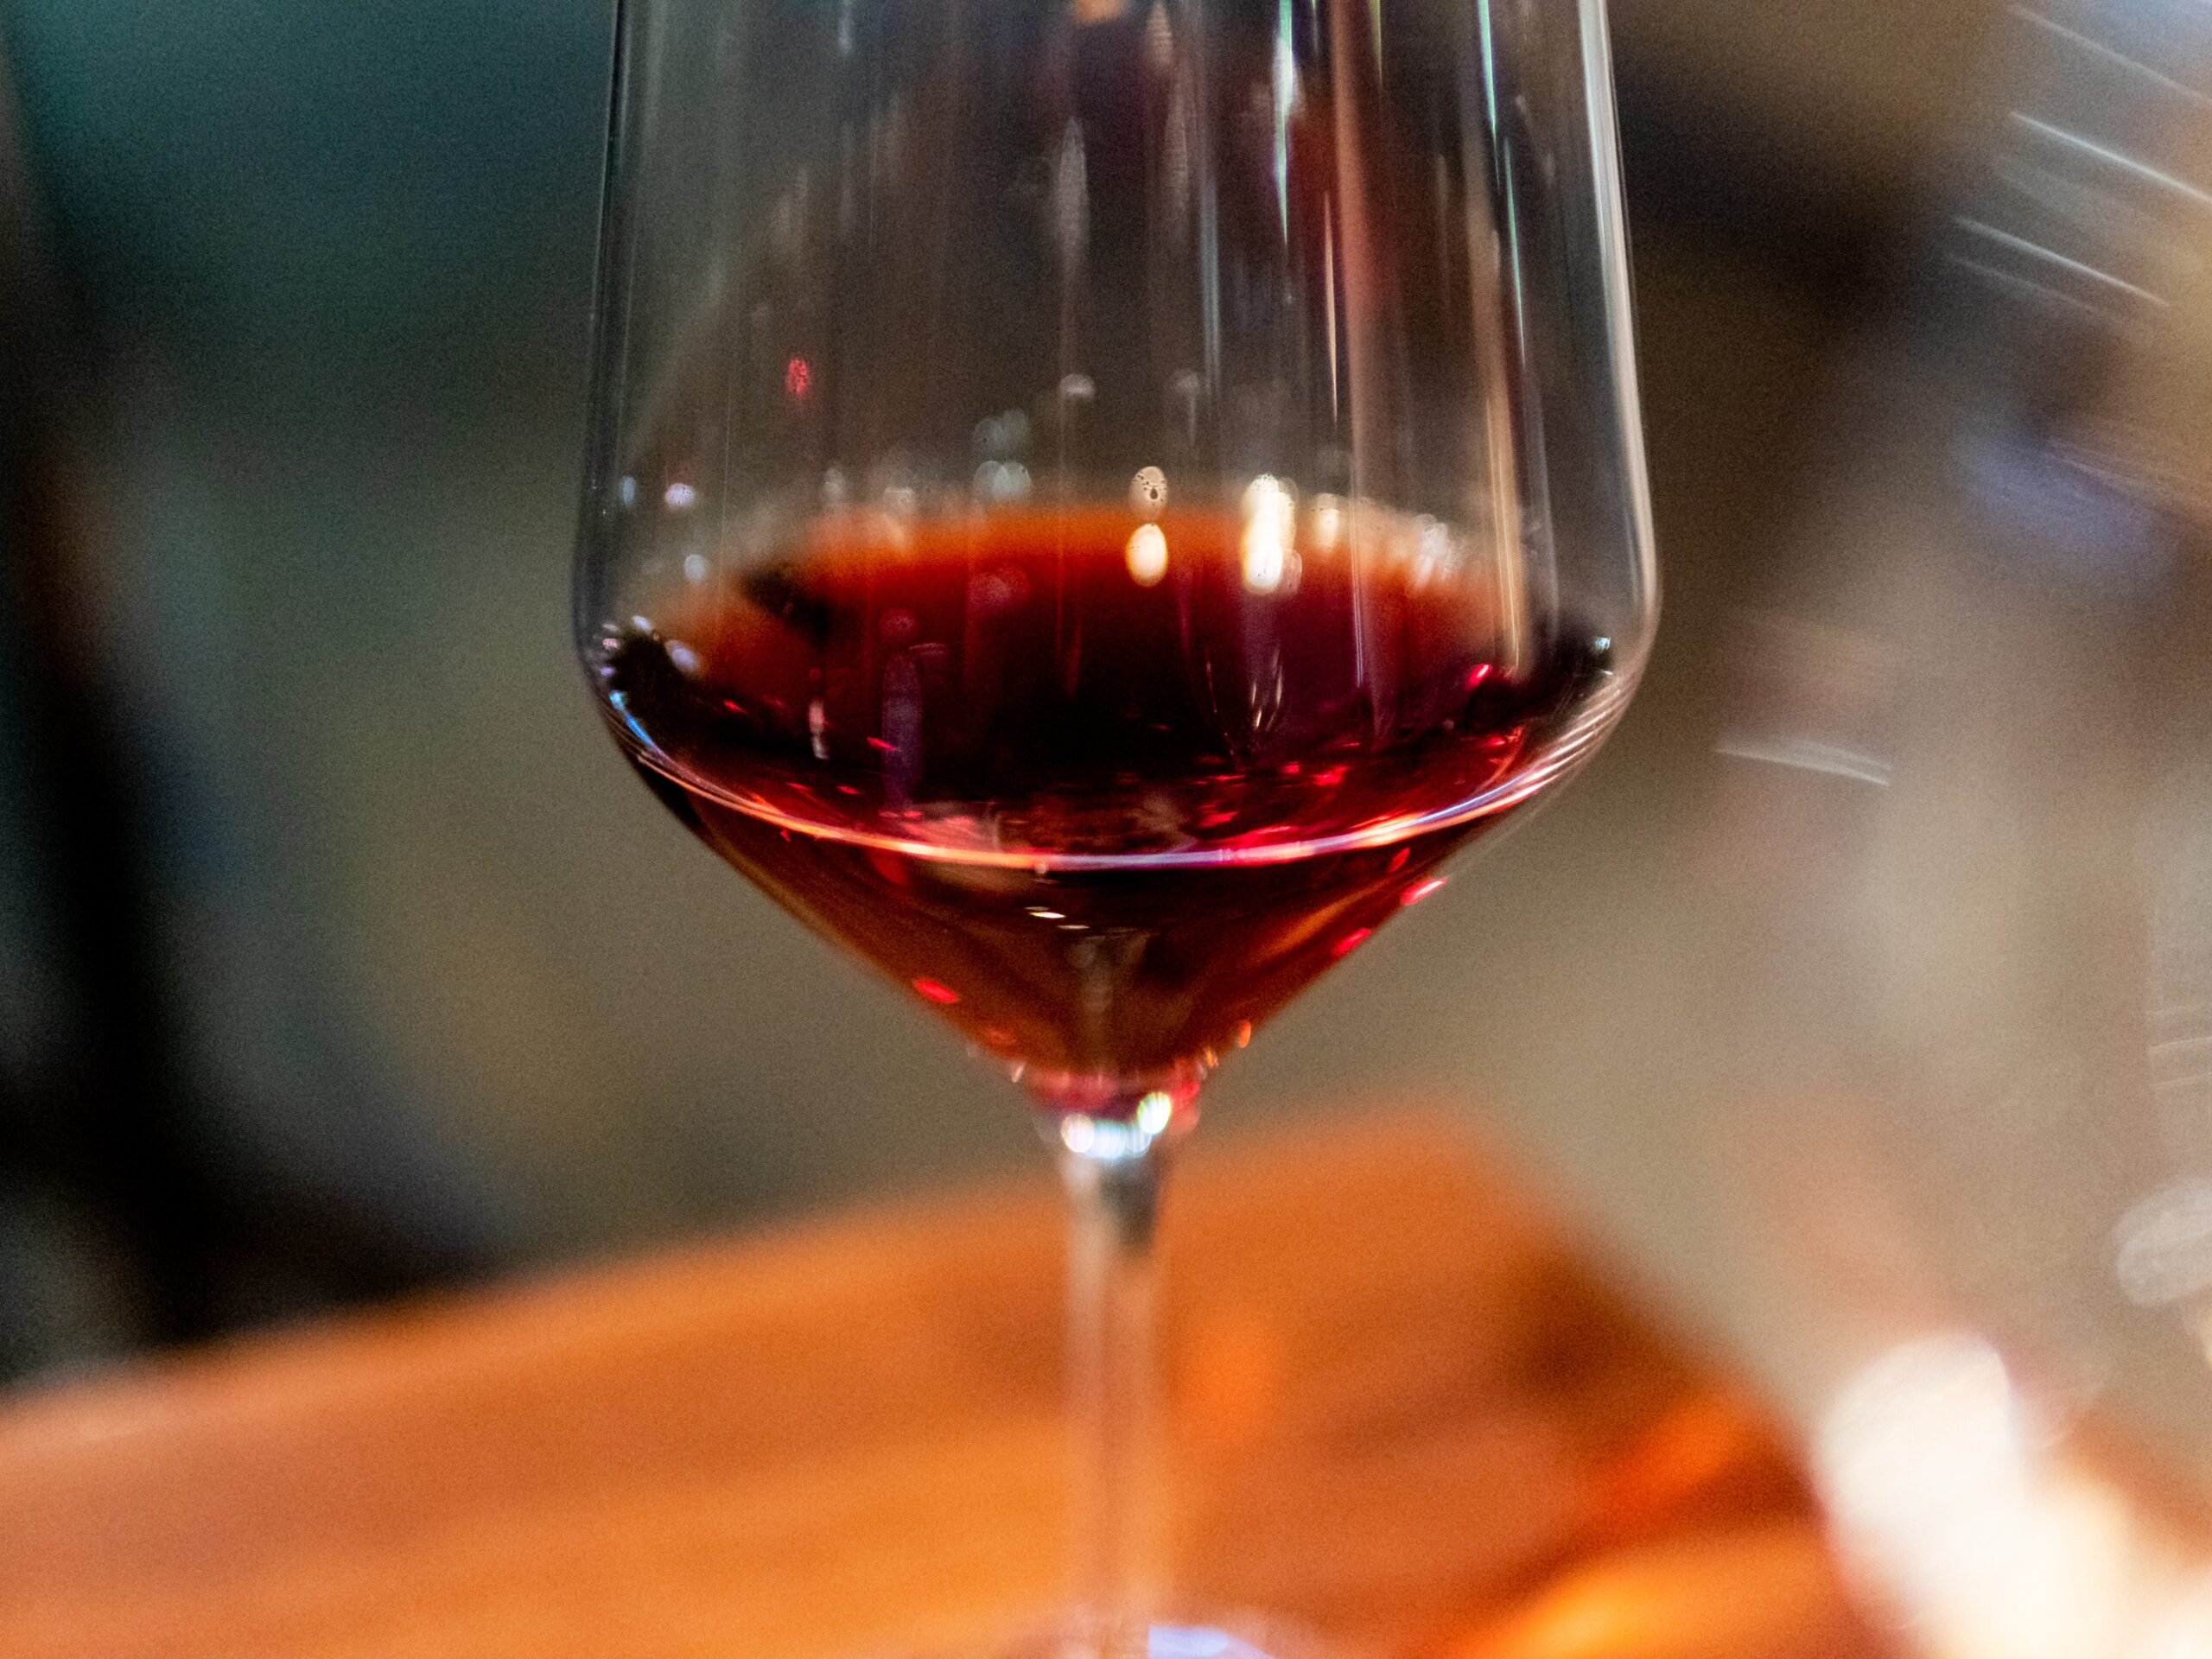 Wine glass with Pinot wine